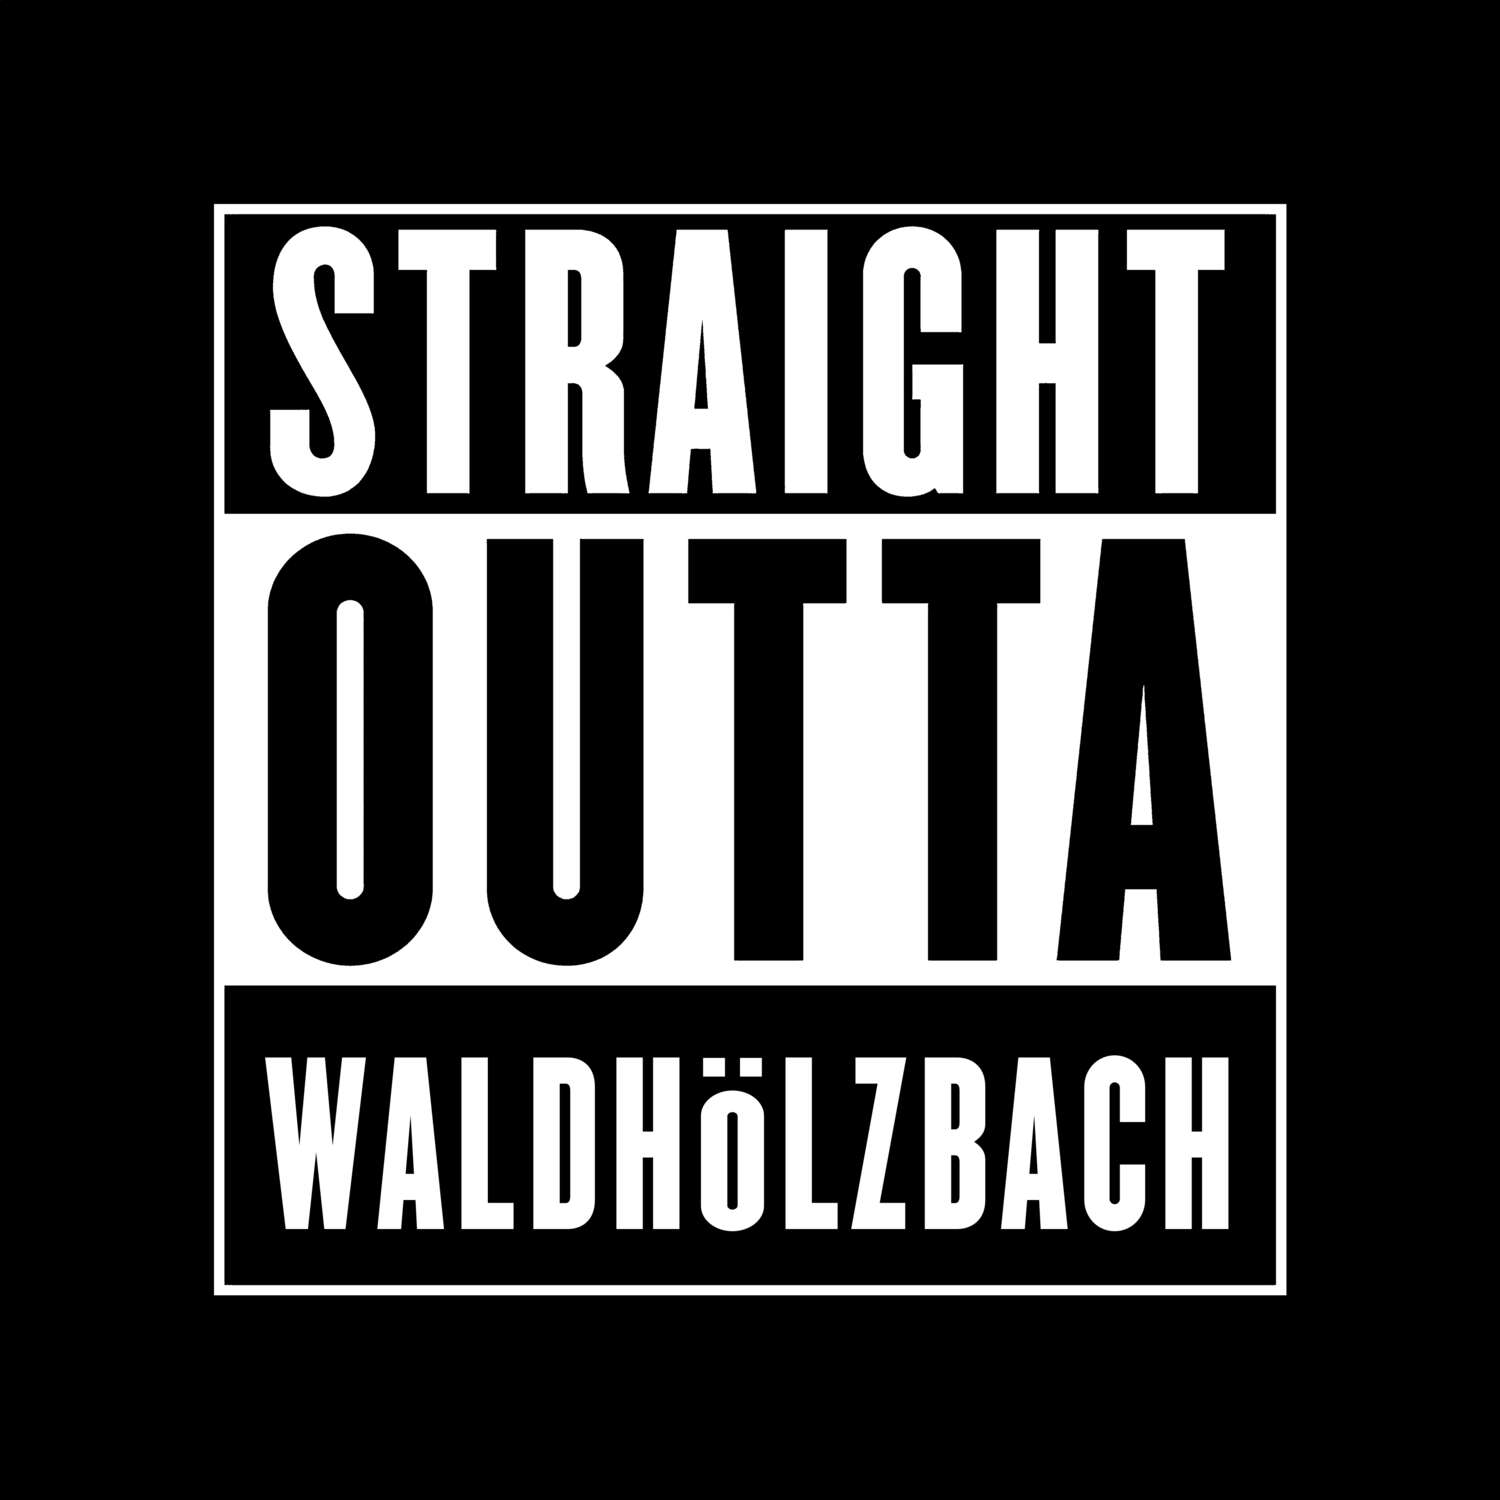 Waldhölzbach T-Shirt »Straight Outta«